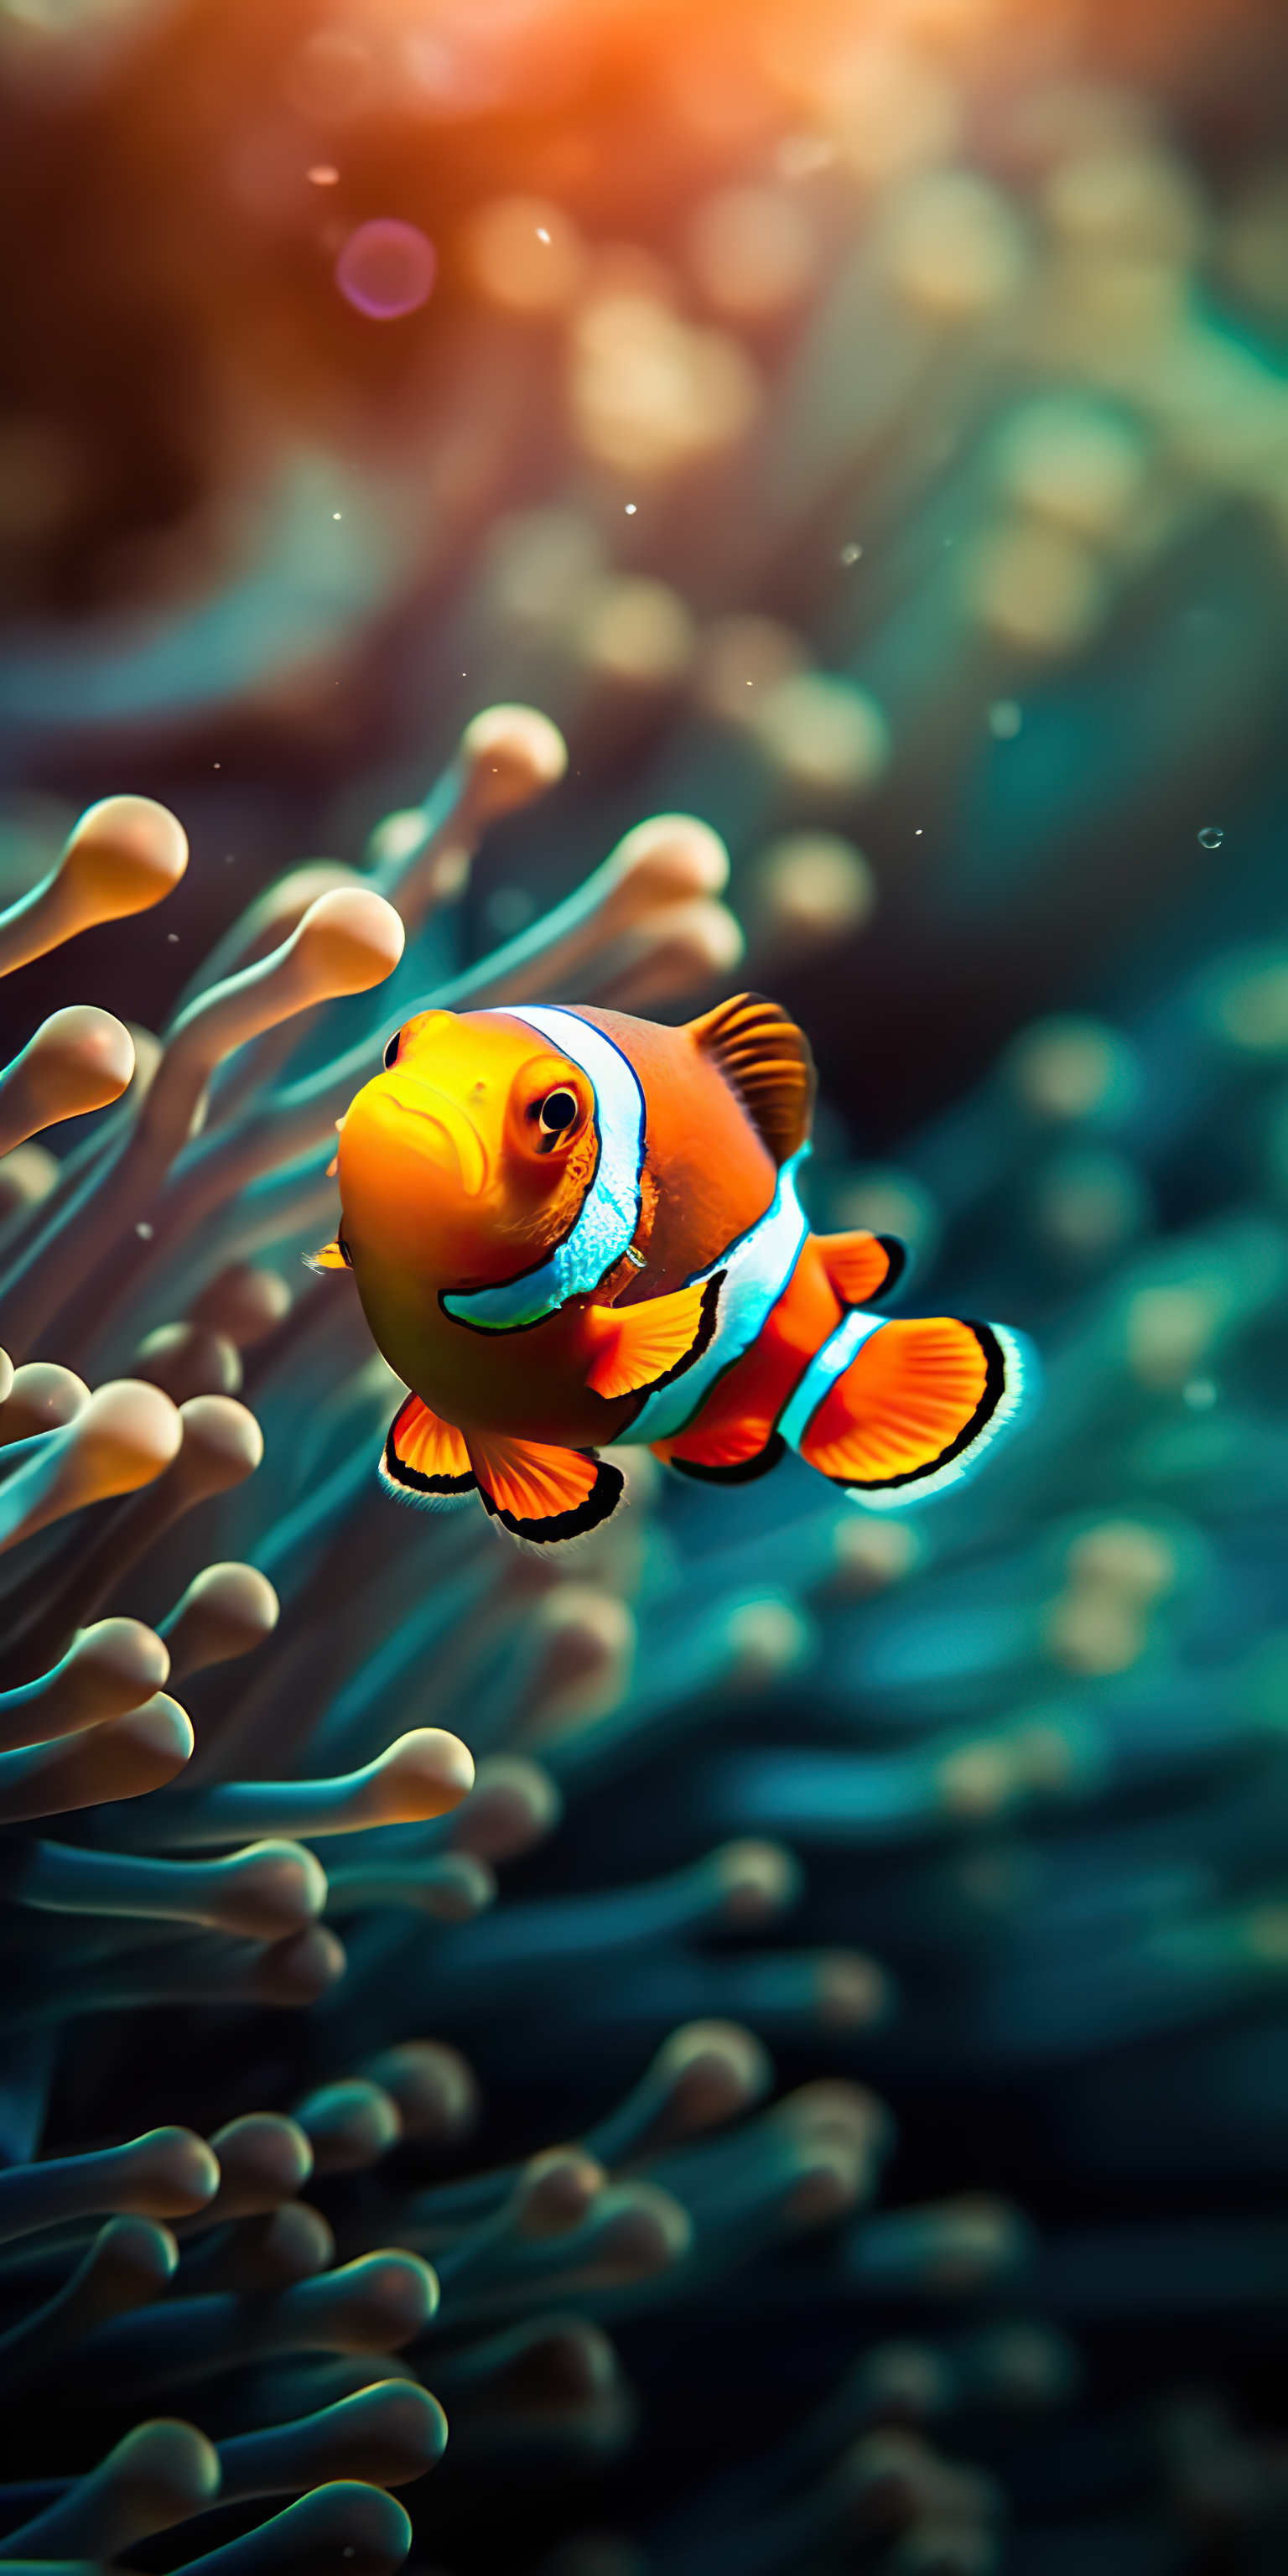 beautiful close-up shot of a cute clownfish next to corals